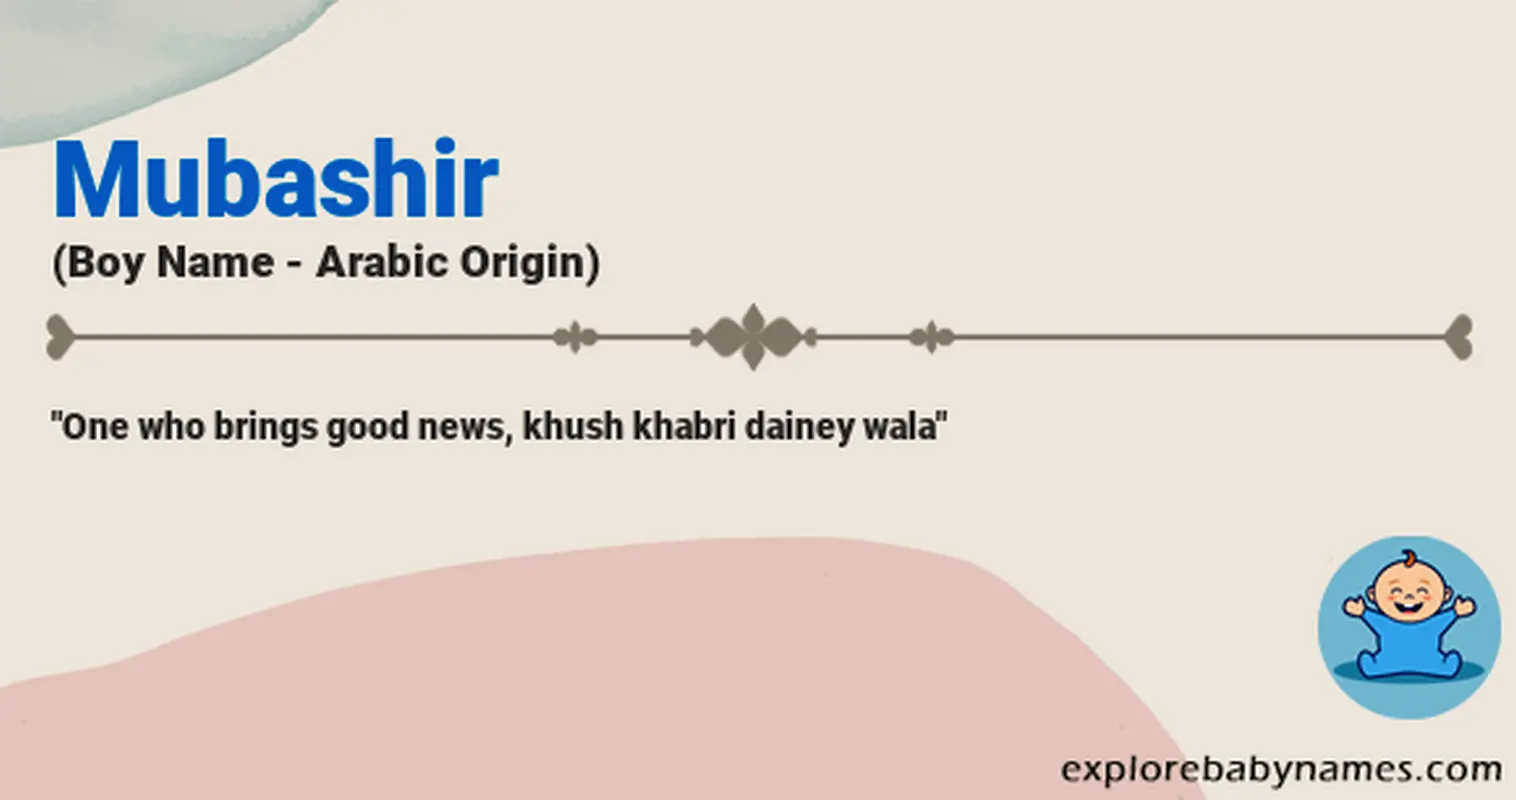 Meaning of Mubashir